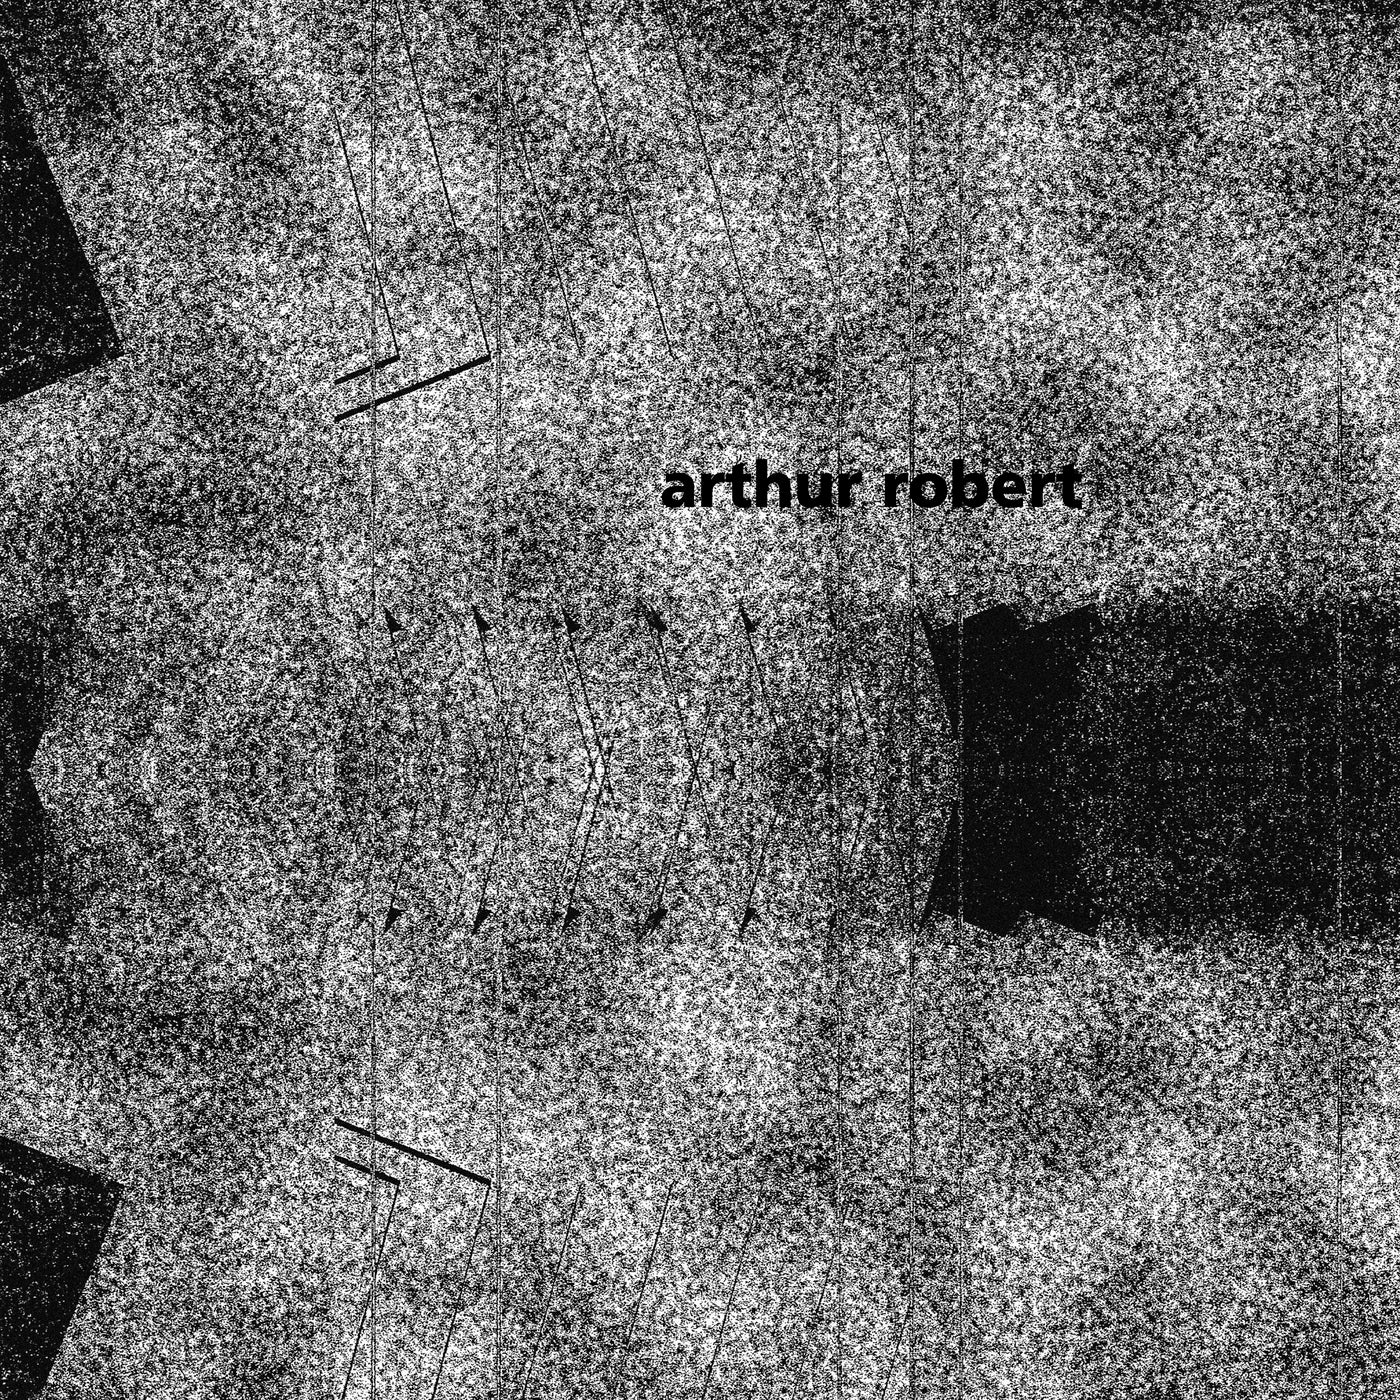 image cover: Arthur Robert - Transition Part 1 / FIGUREX25